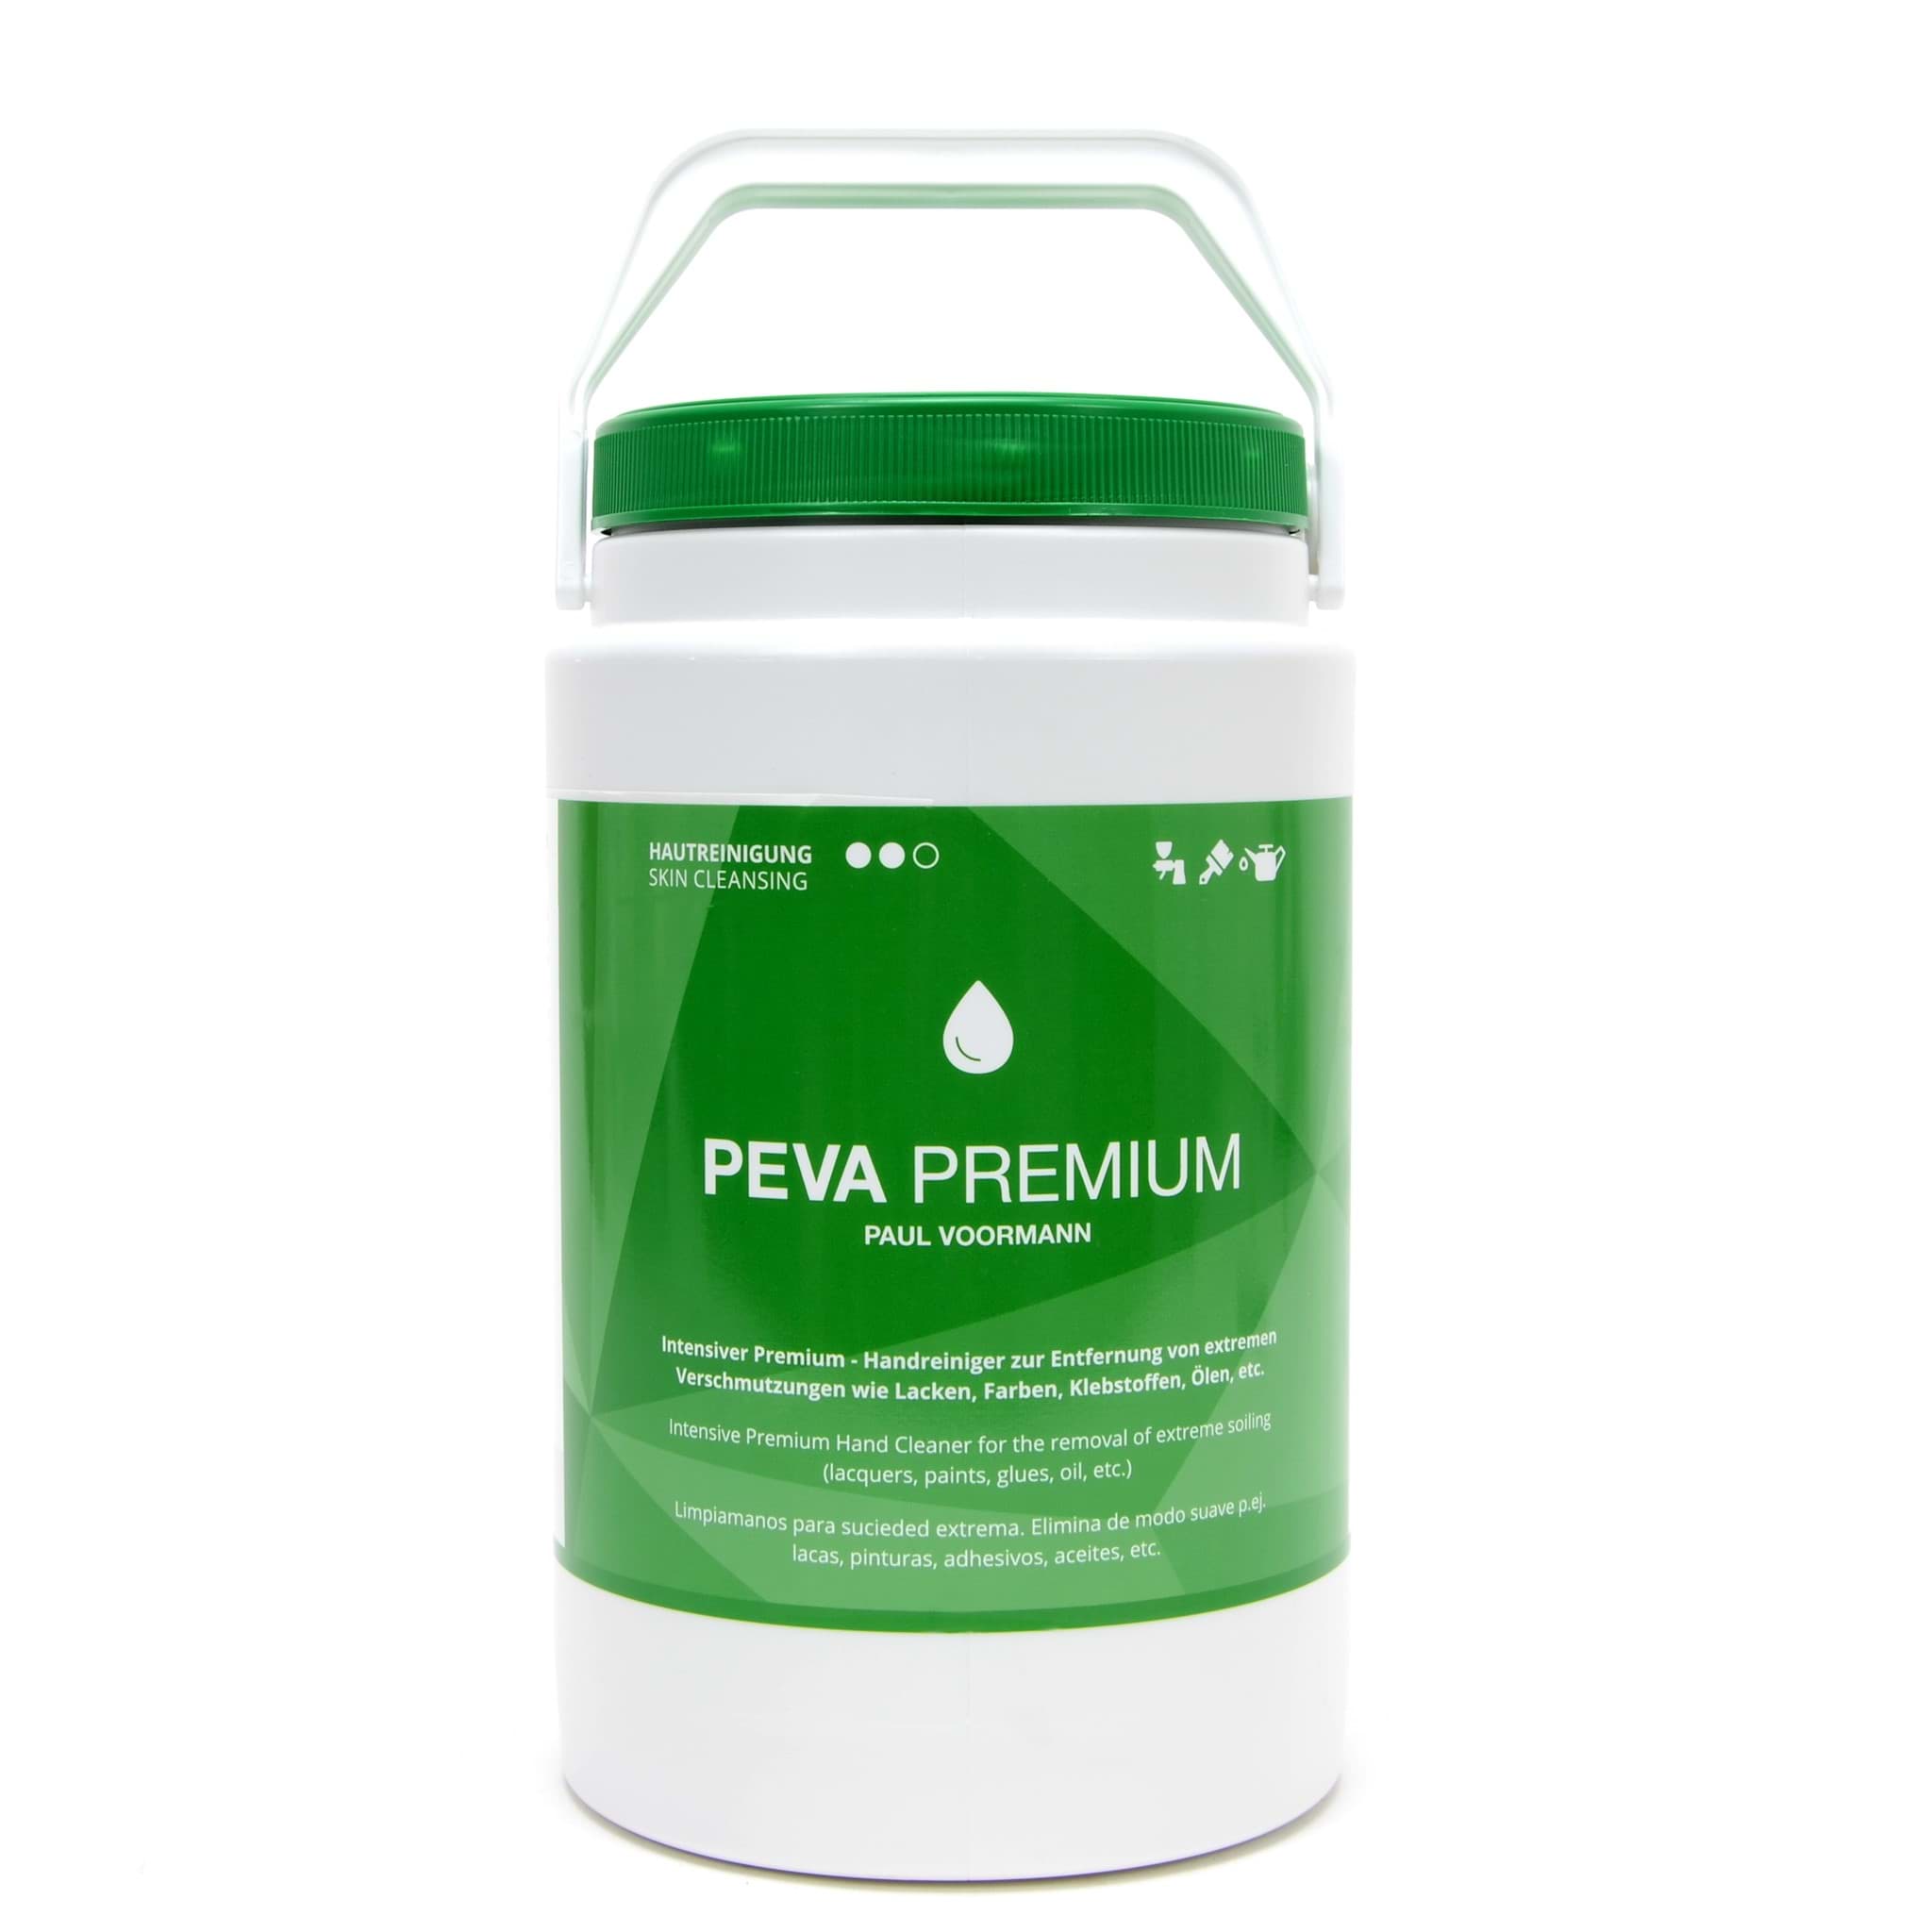 Peva Premium Handreiniger 3 Liter resmi